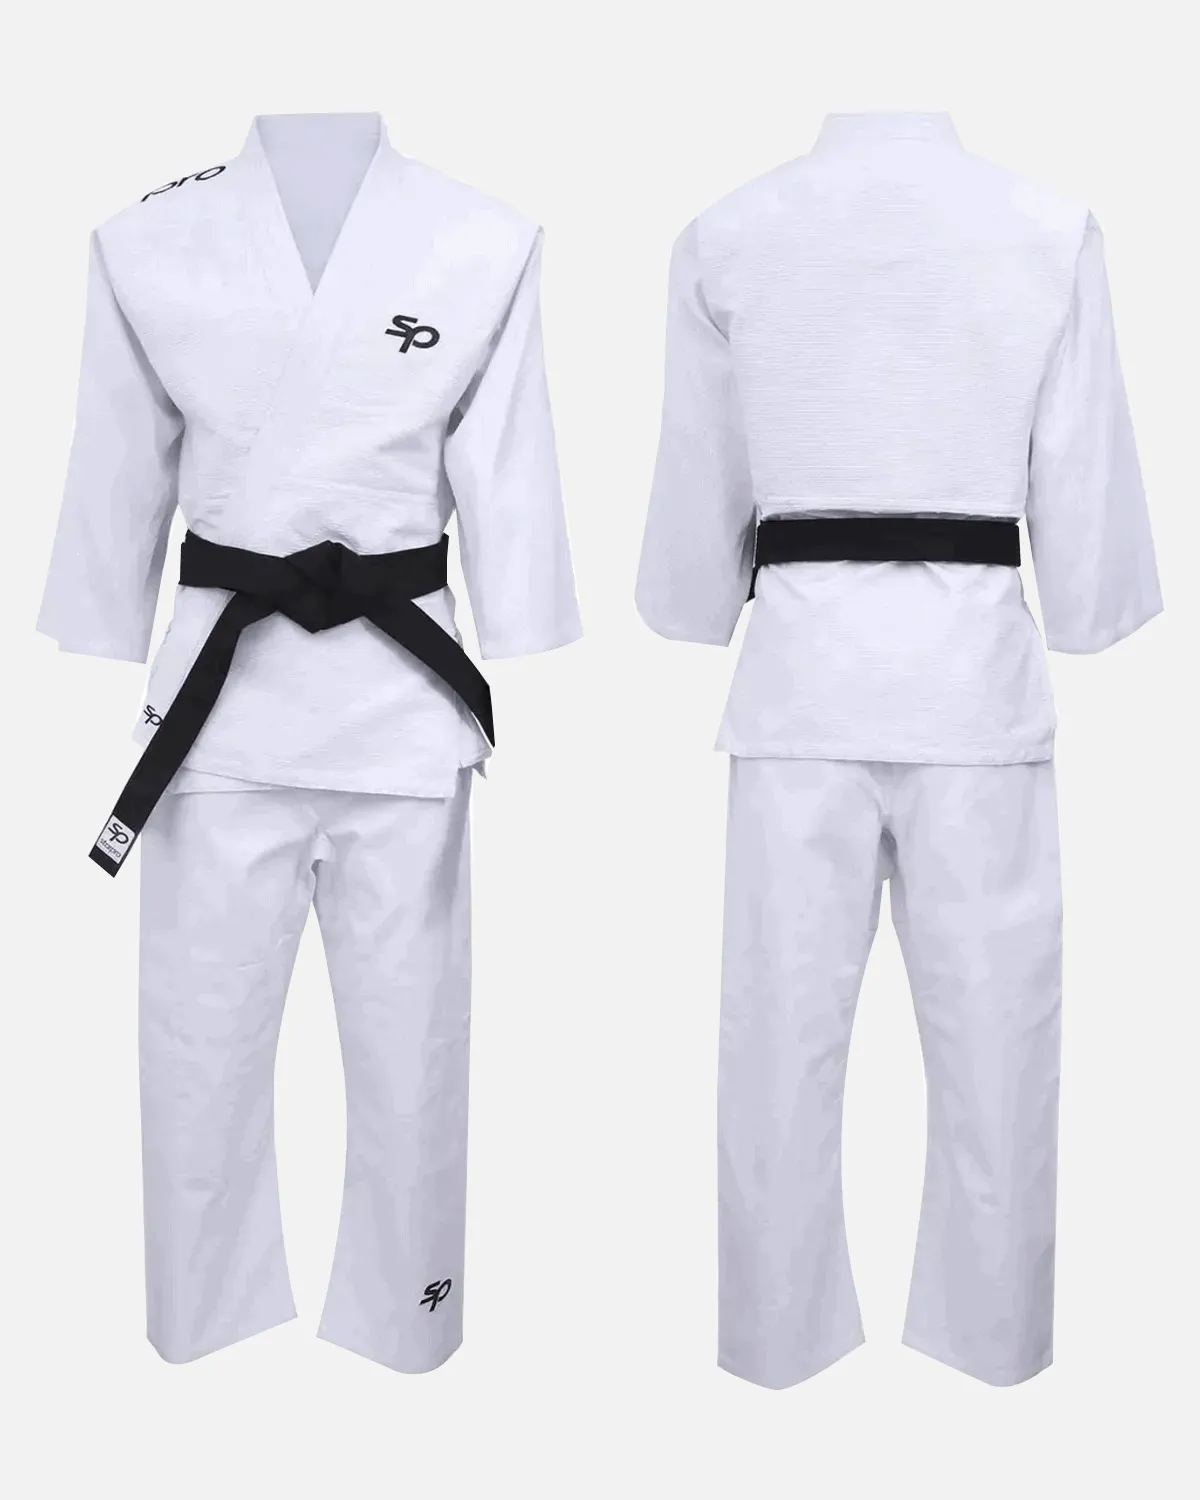 110-190 cm |Comes WITHOUT Belt Good for Karate Gi Professional IJF Kit MMA Martial Arts Taekwondo Fight White Kimono 350g Best for Men Women and Kids Starpro Judo Suit Uniform Training 